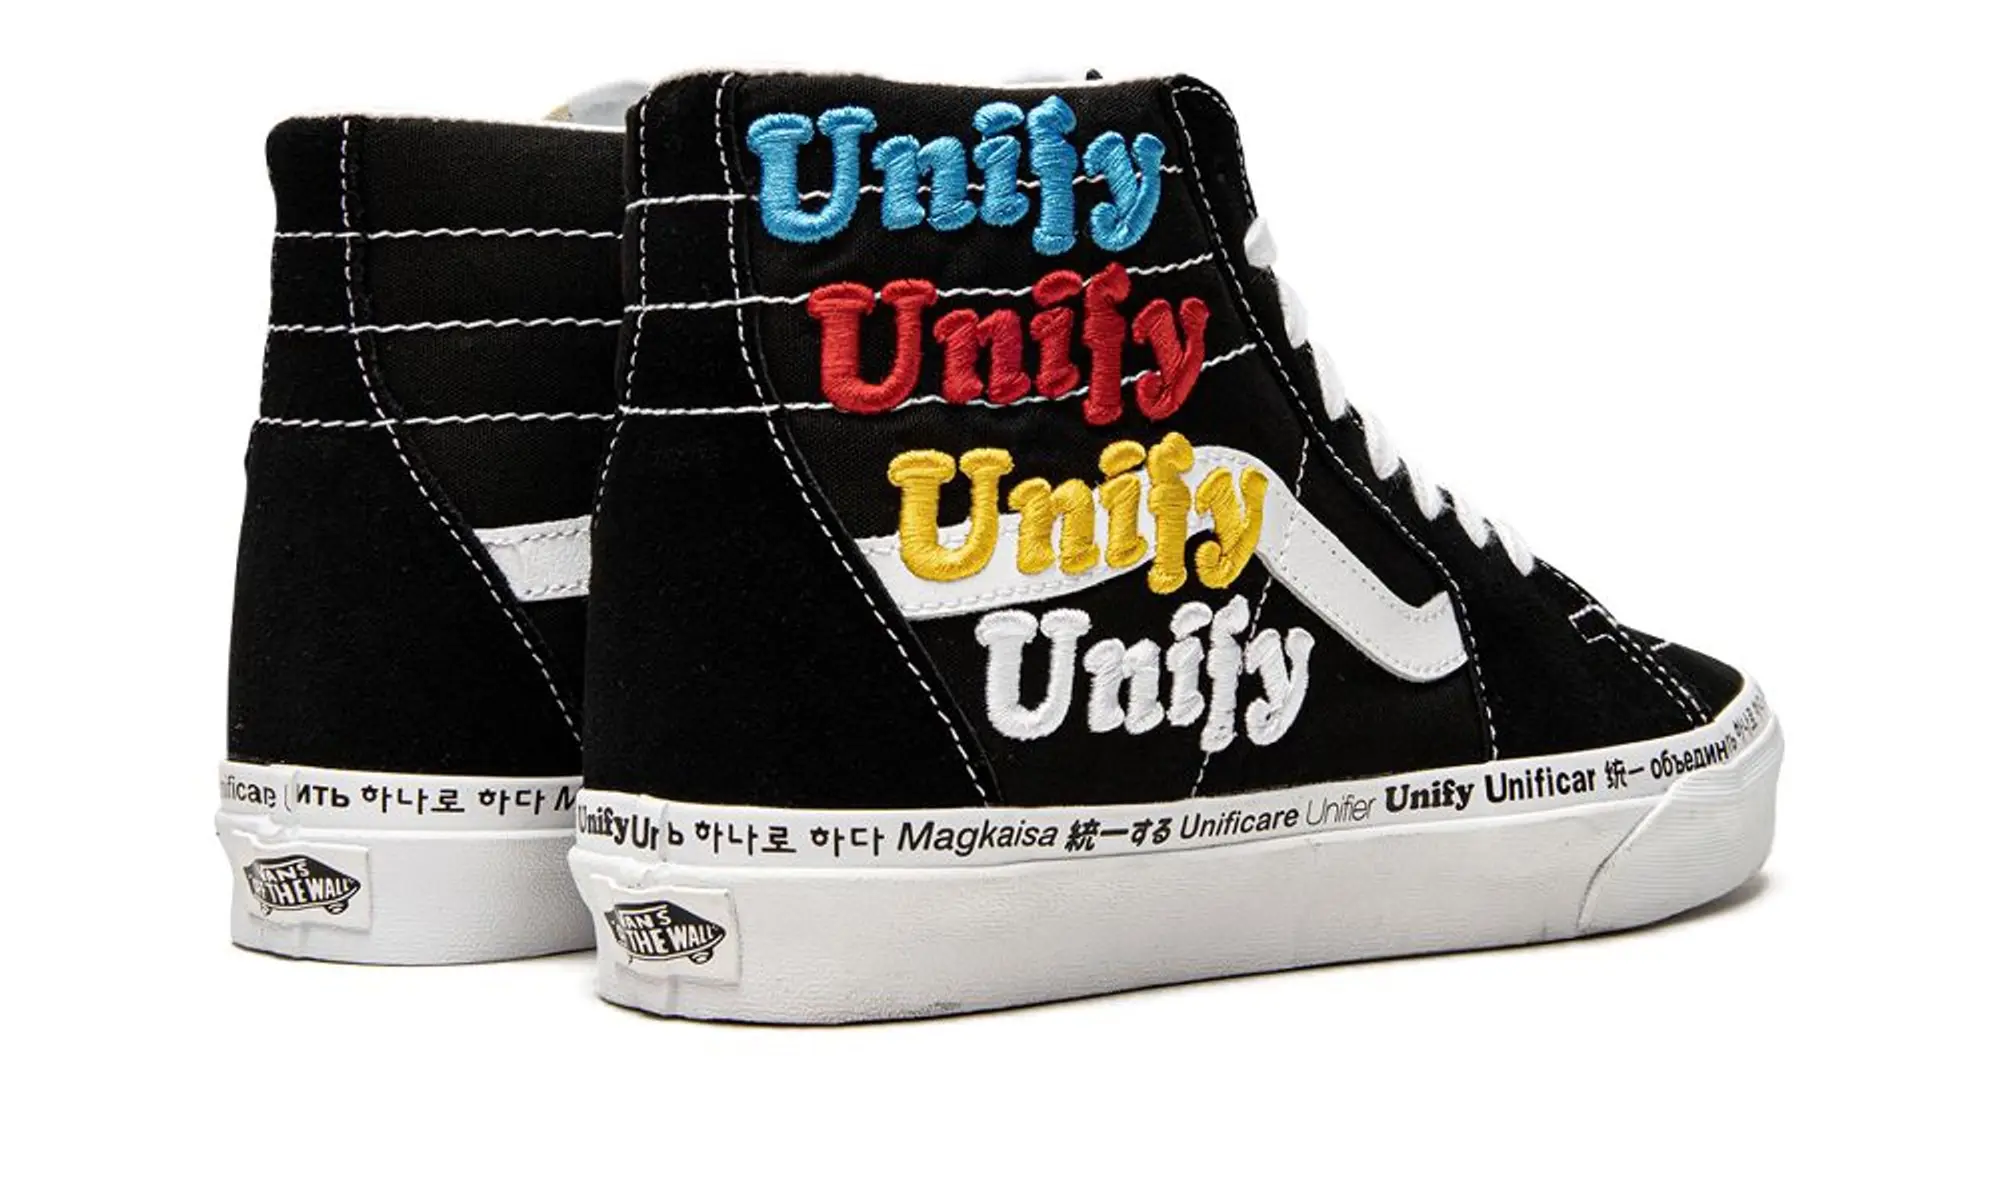 Vans SK8-Hi Unify Shoes